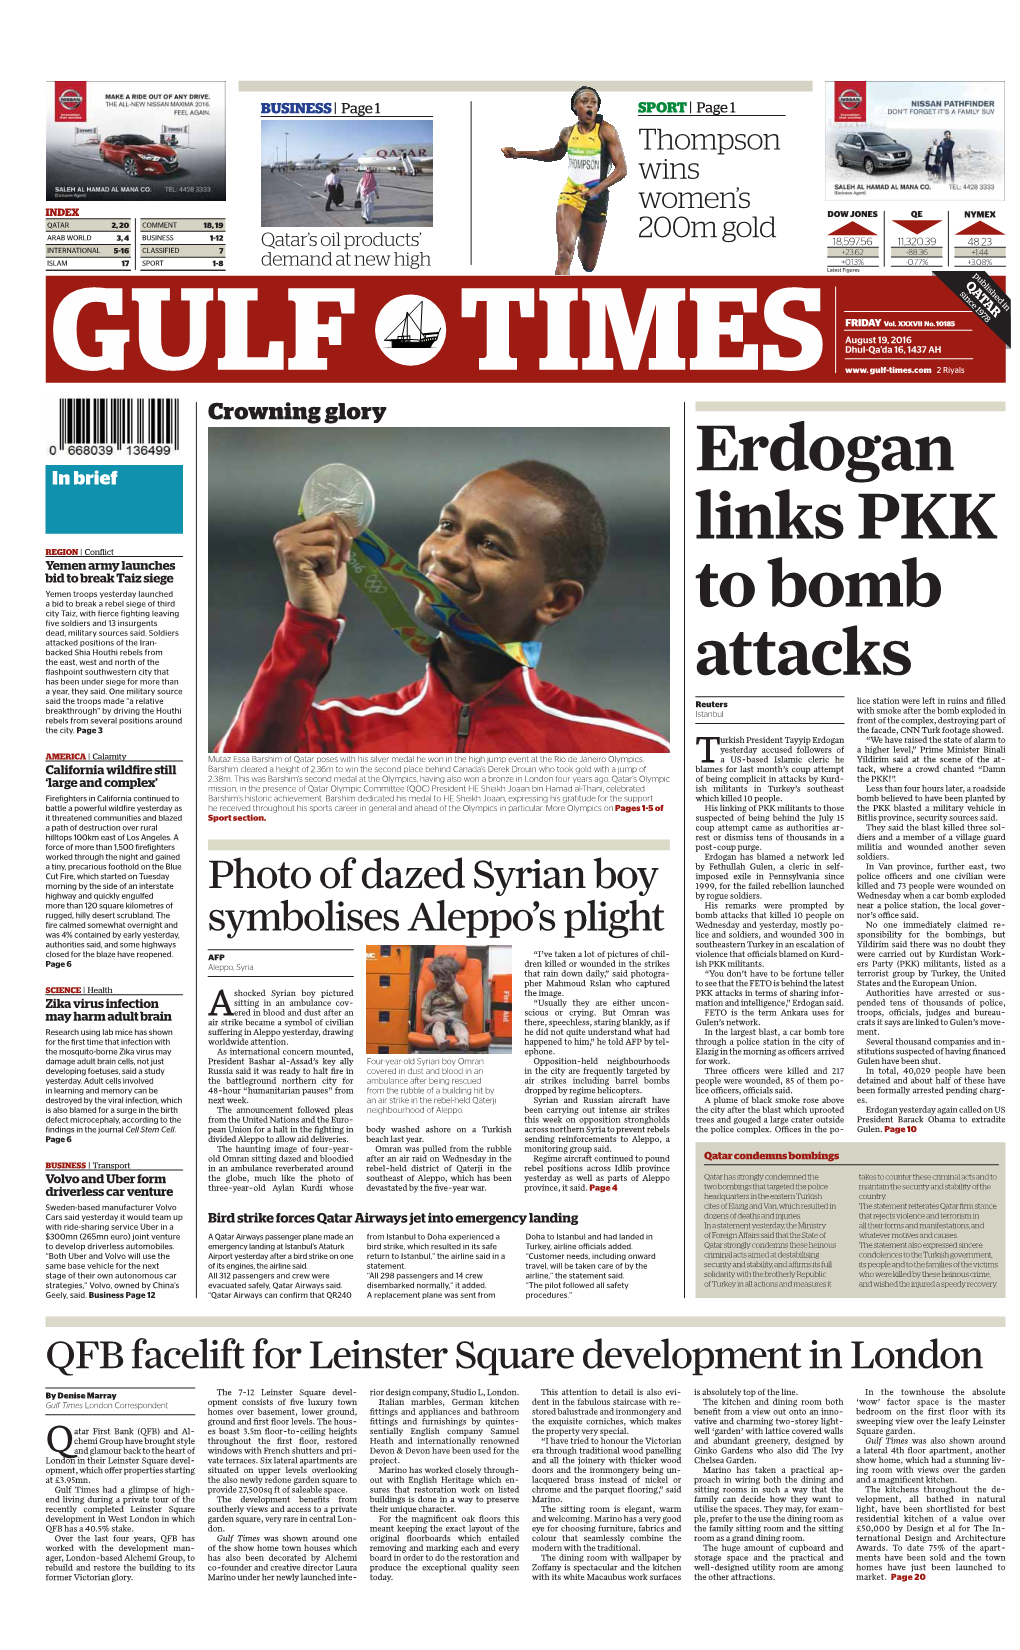 Erdogan Links PKK to Bomb Attacks